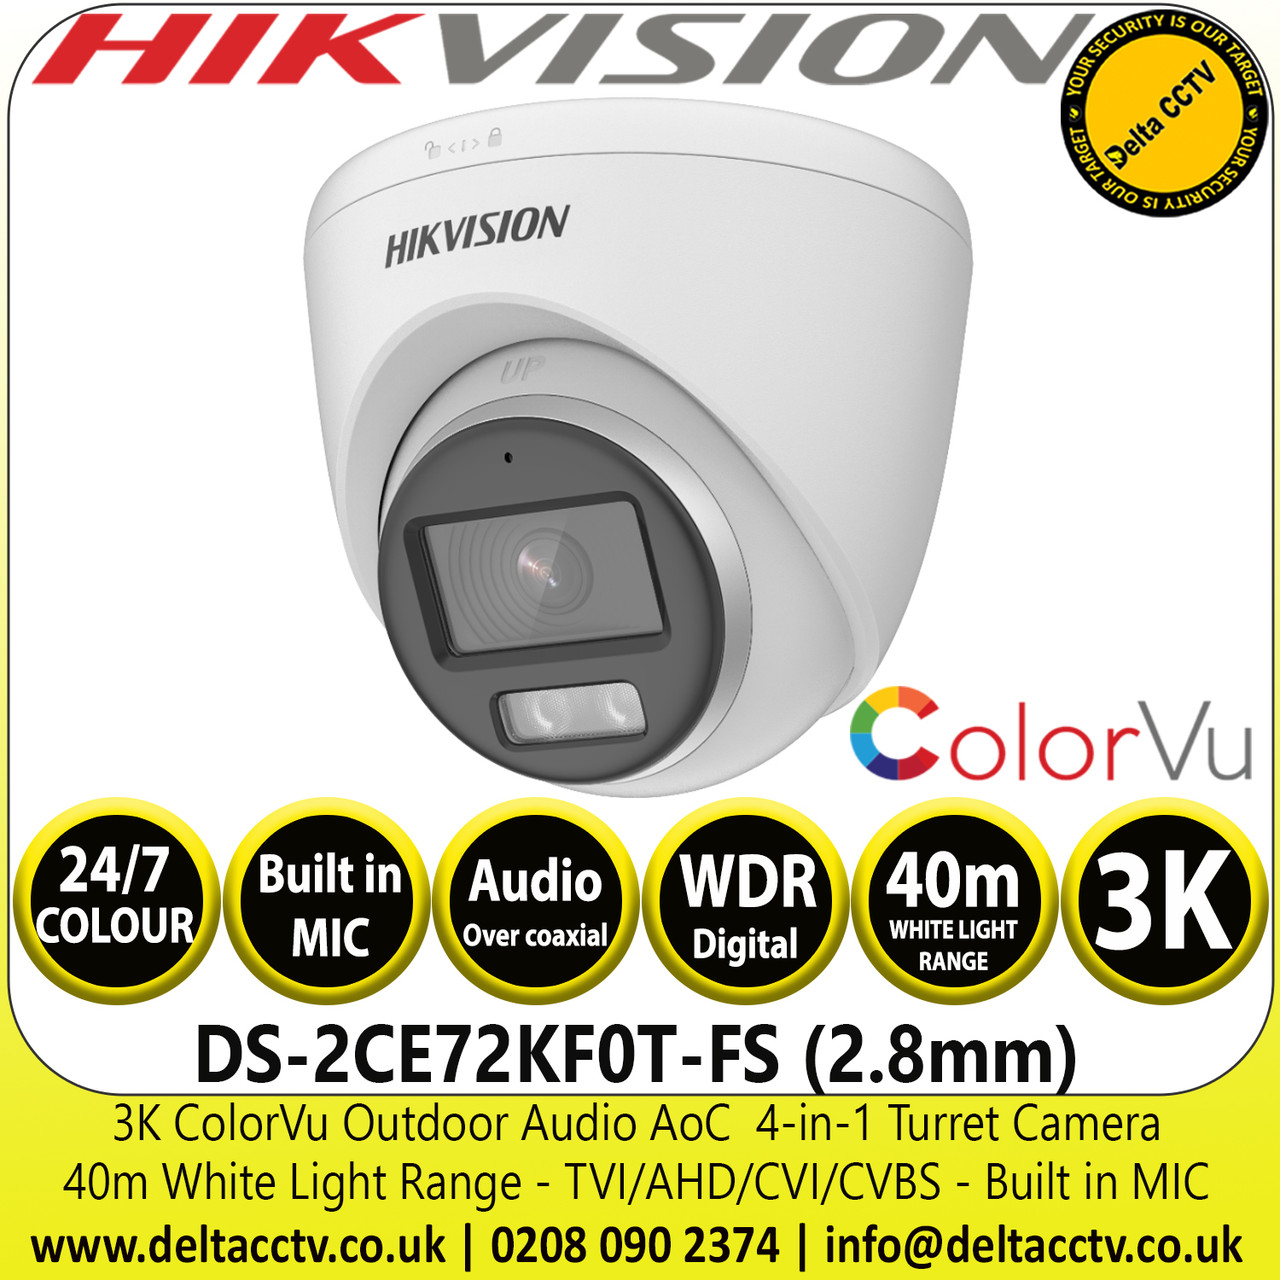 HIKVISION COLORVU 3K CCTV 6MP DS-2CE72KF0T-FS AUDIO CAMERA 6 